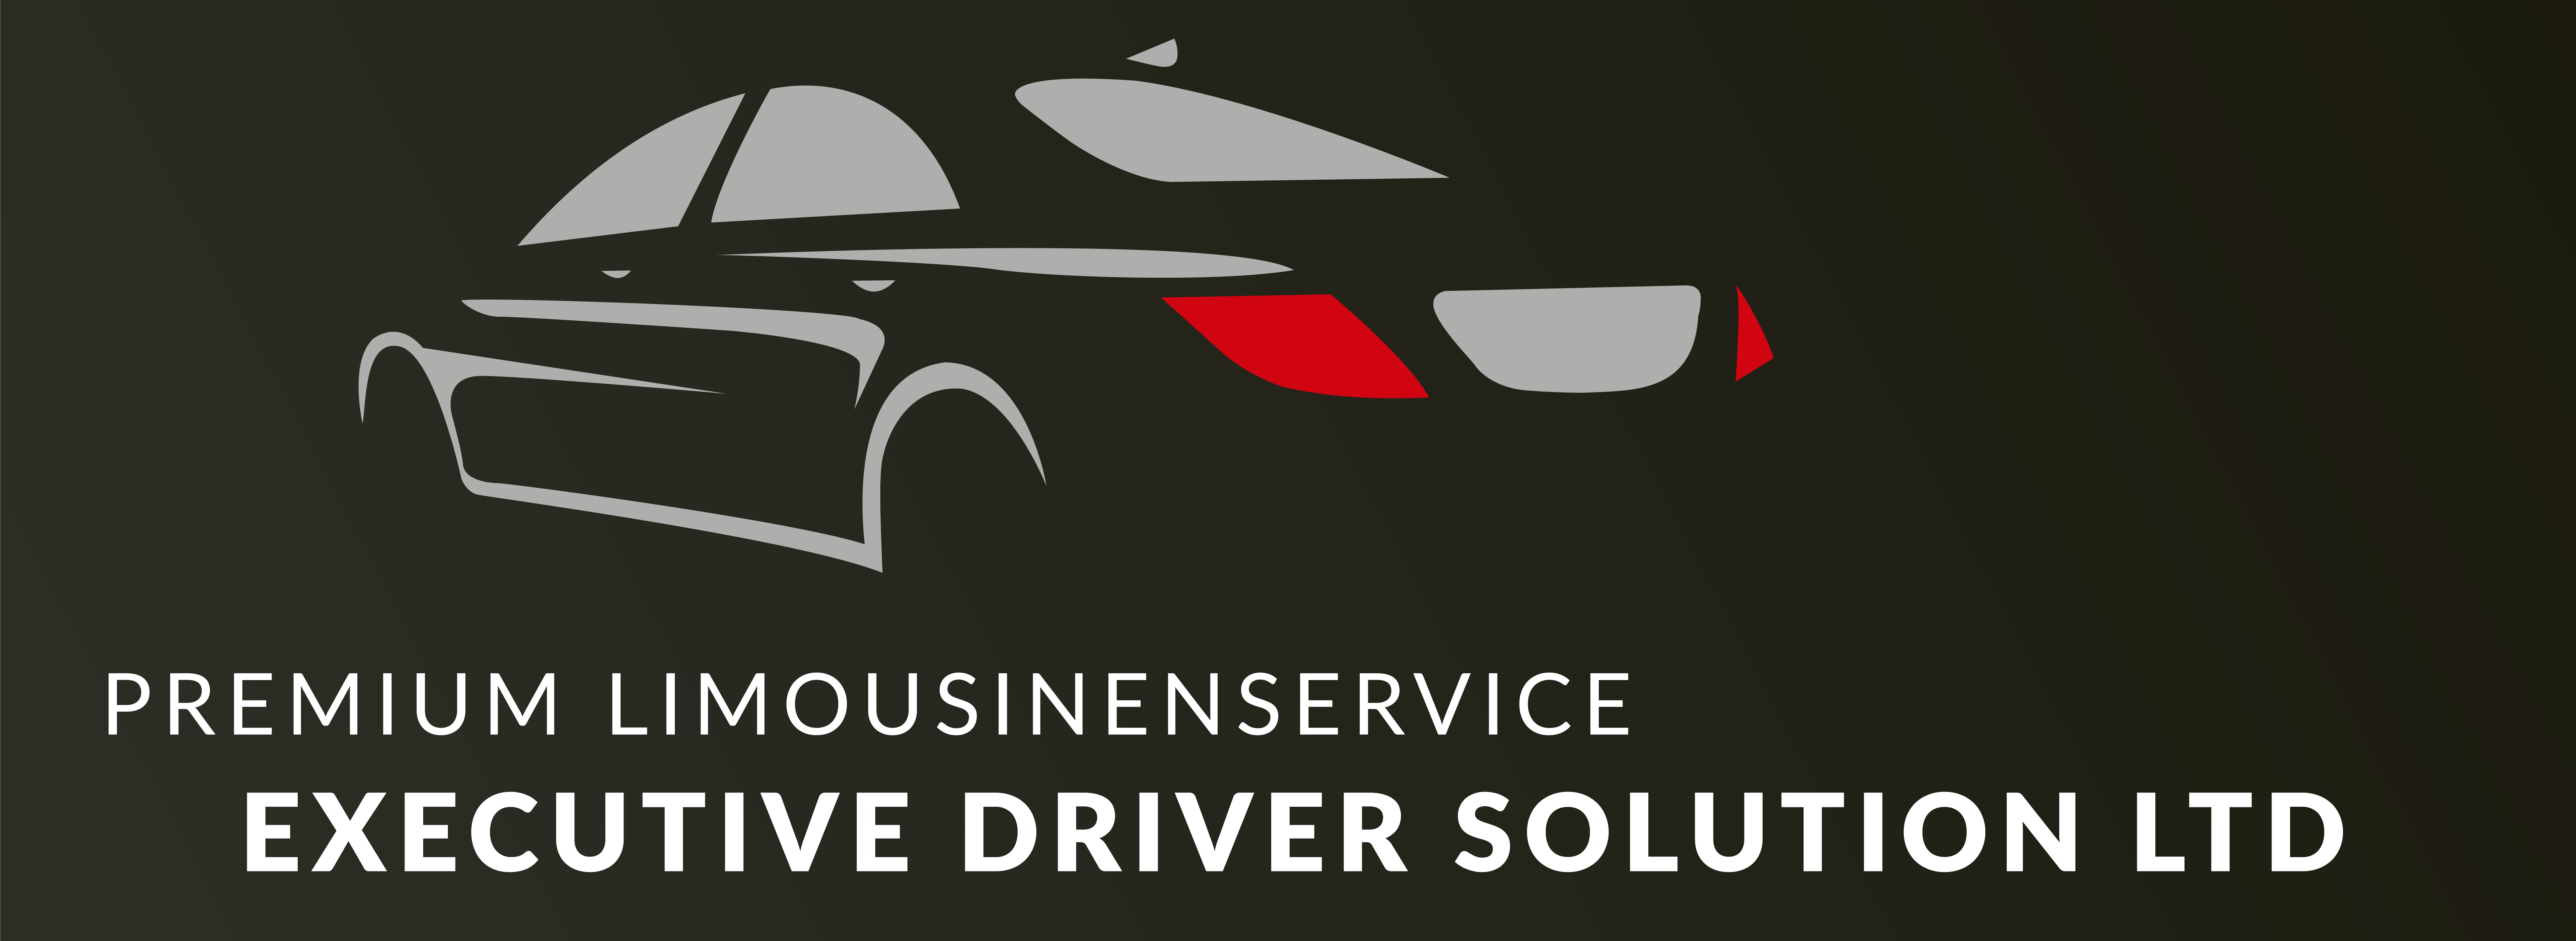 Executive Driver Solution LTD